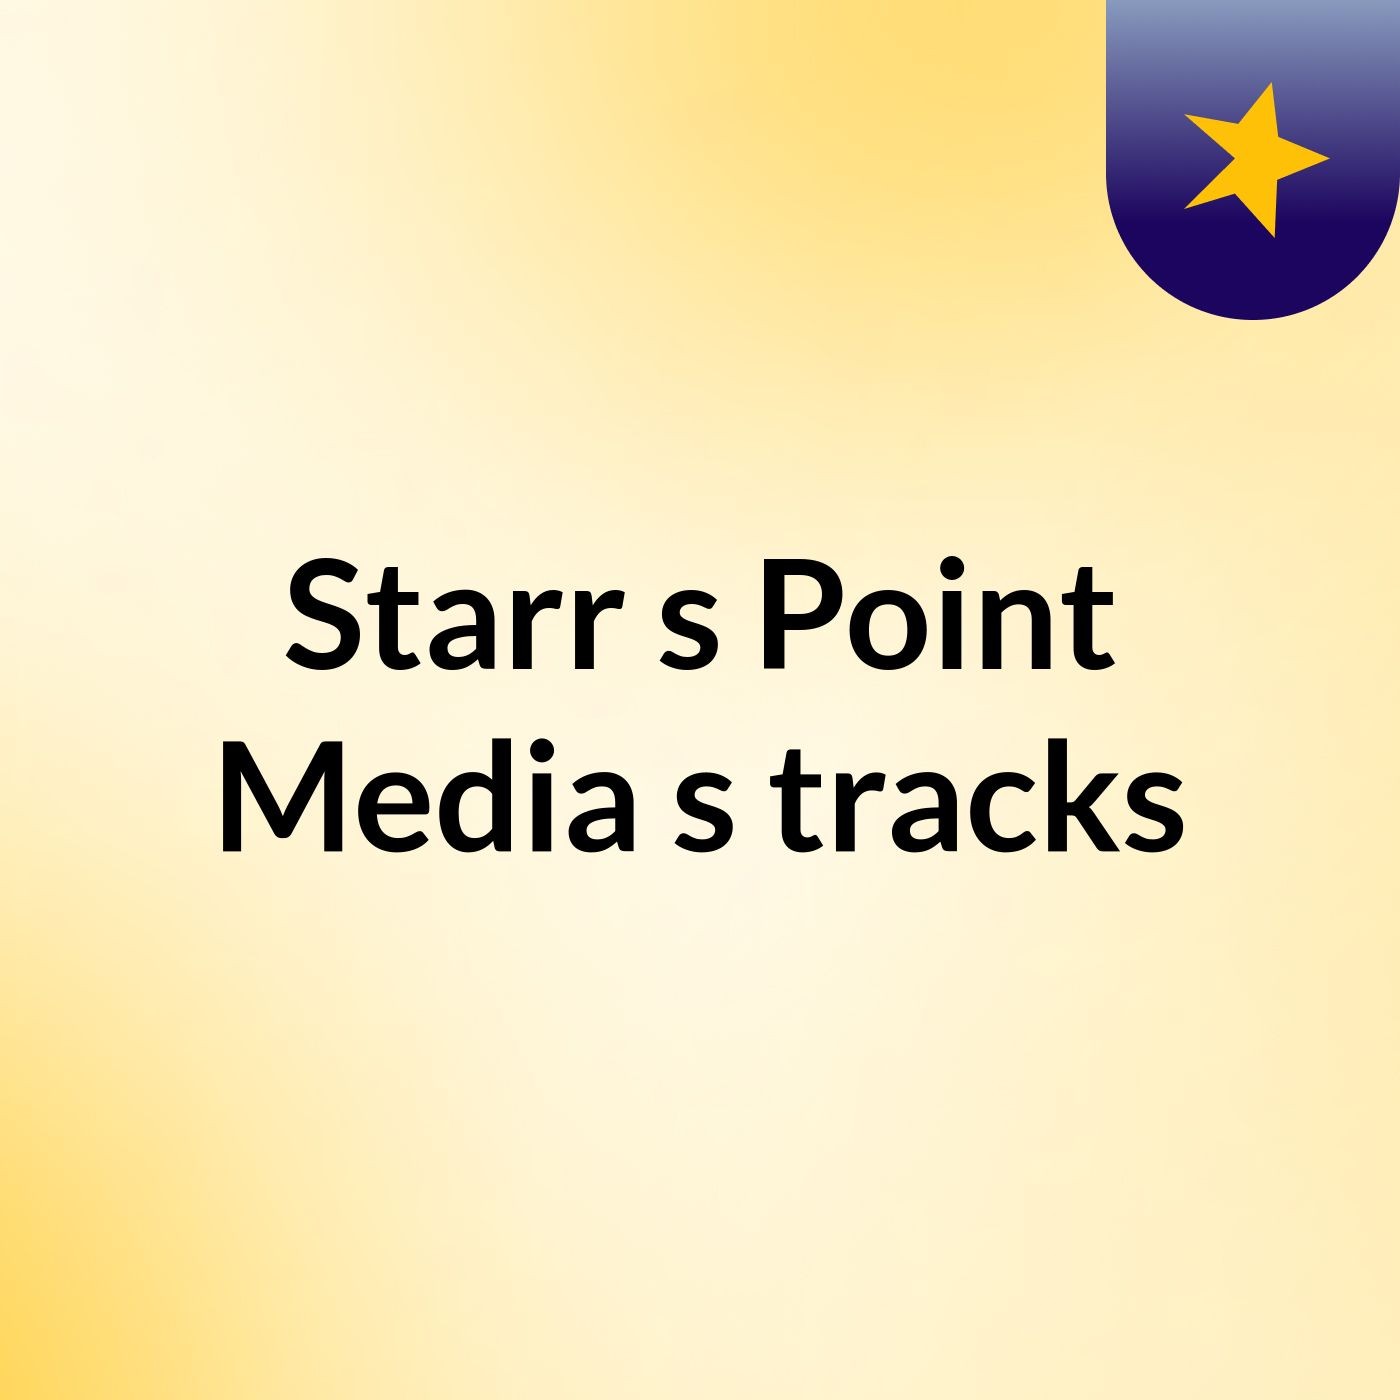 Starr's Point Media's tracks